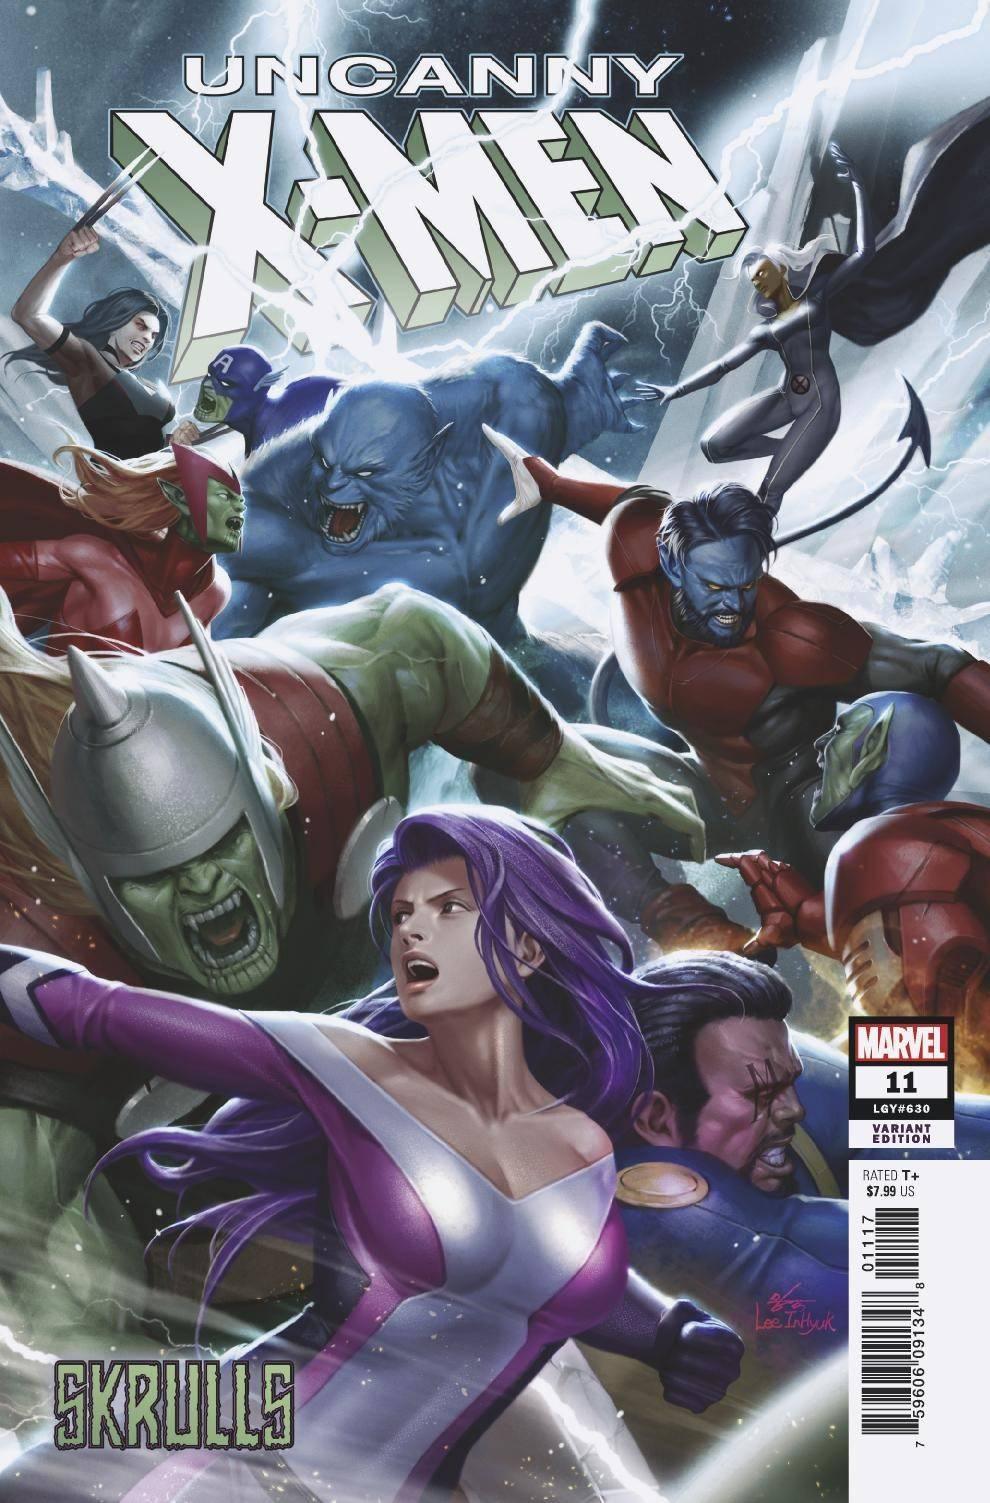 UNCANNY X-MEN VOL 5 #11 INHYUK LEE SKRULLS VAR - Kings Comics